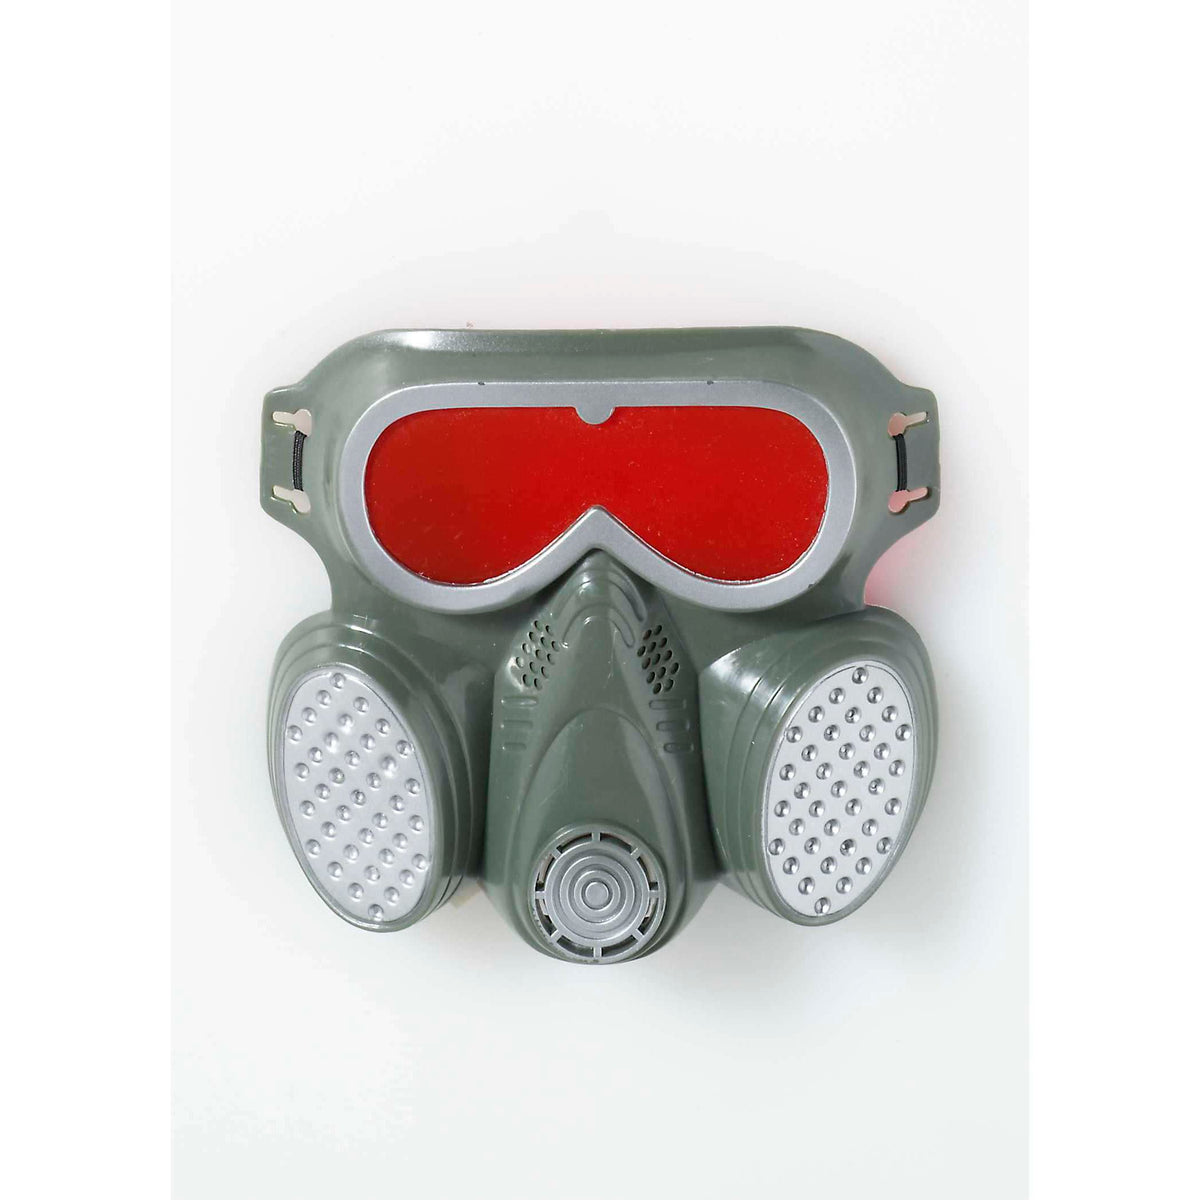 Biohazard Gas Mask